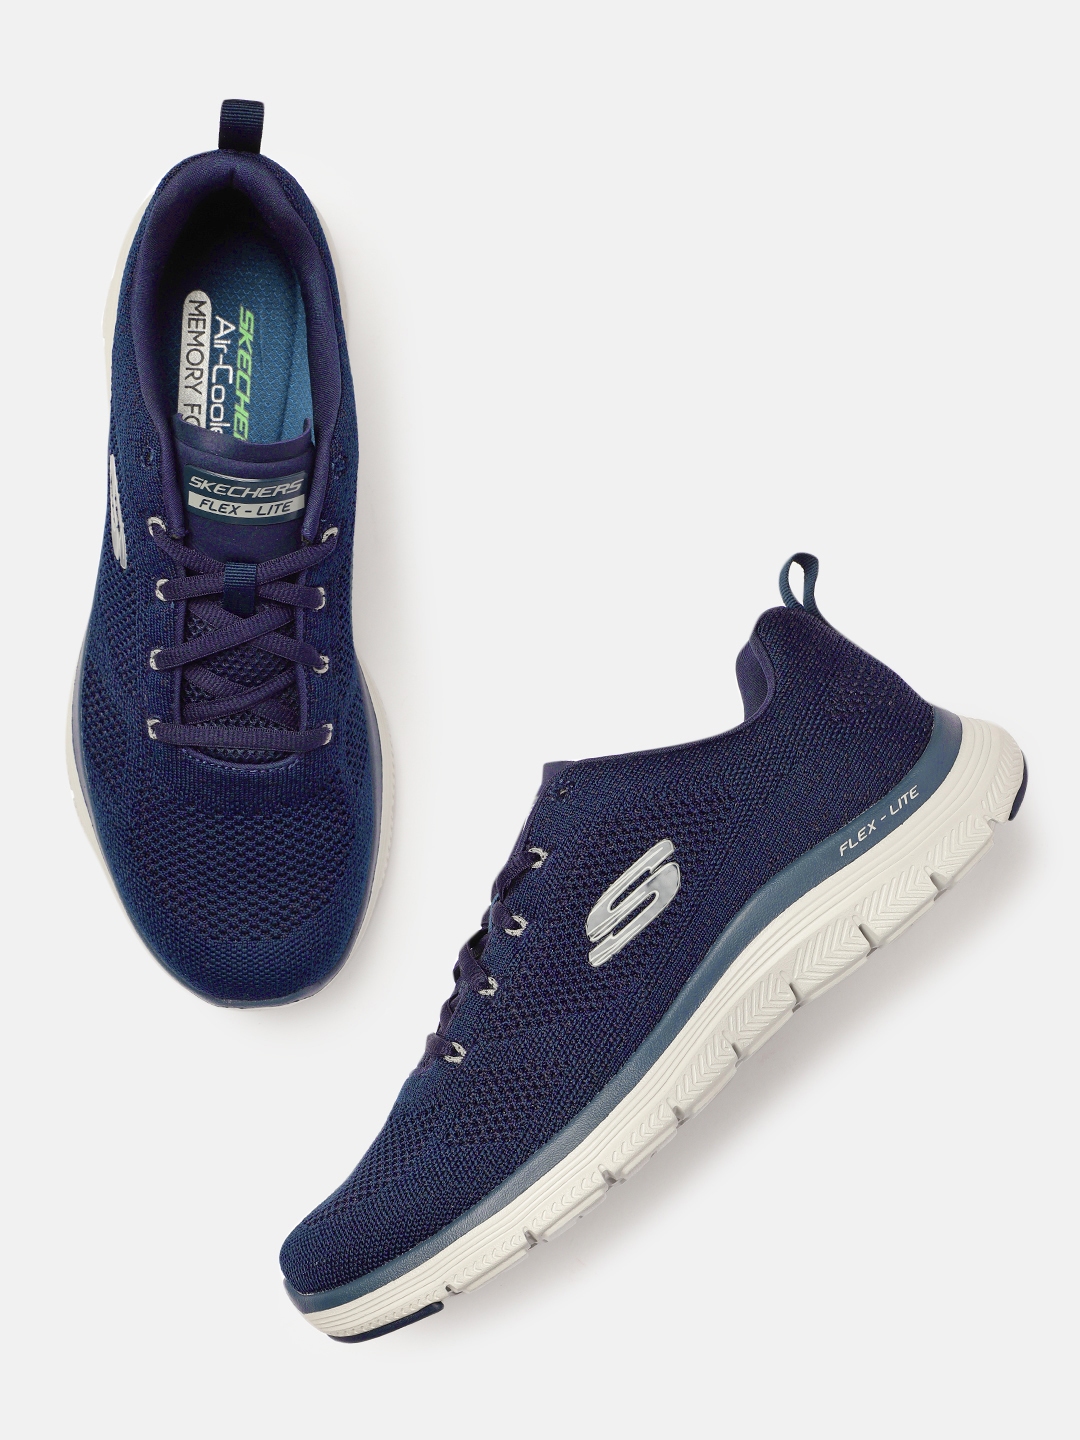 Buy Skechers Men Navy Blue Solid Sneakers - Casual Shoes for Men ...